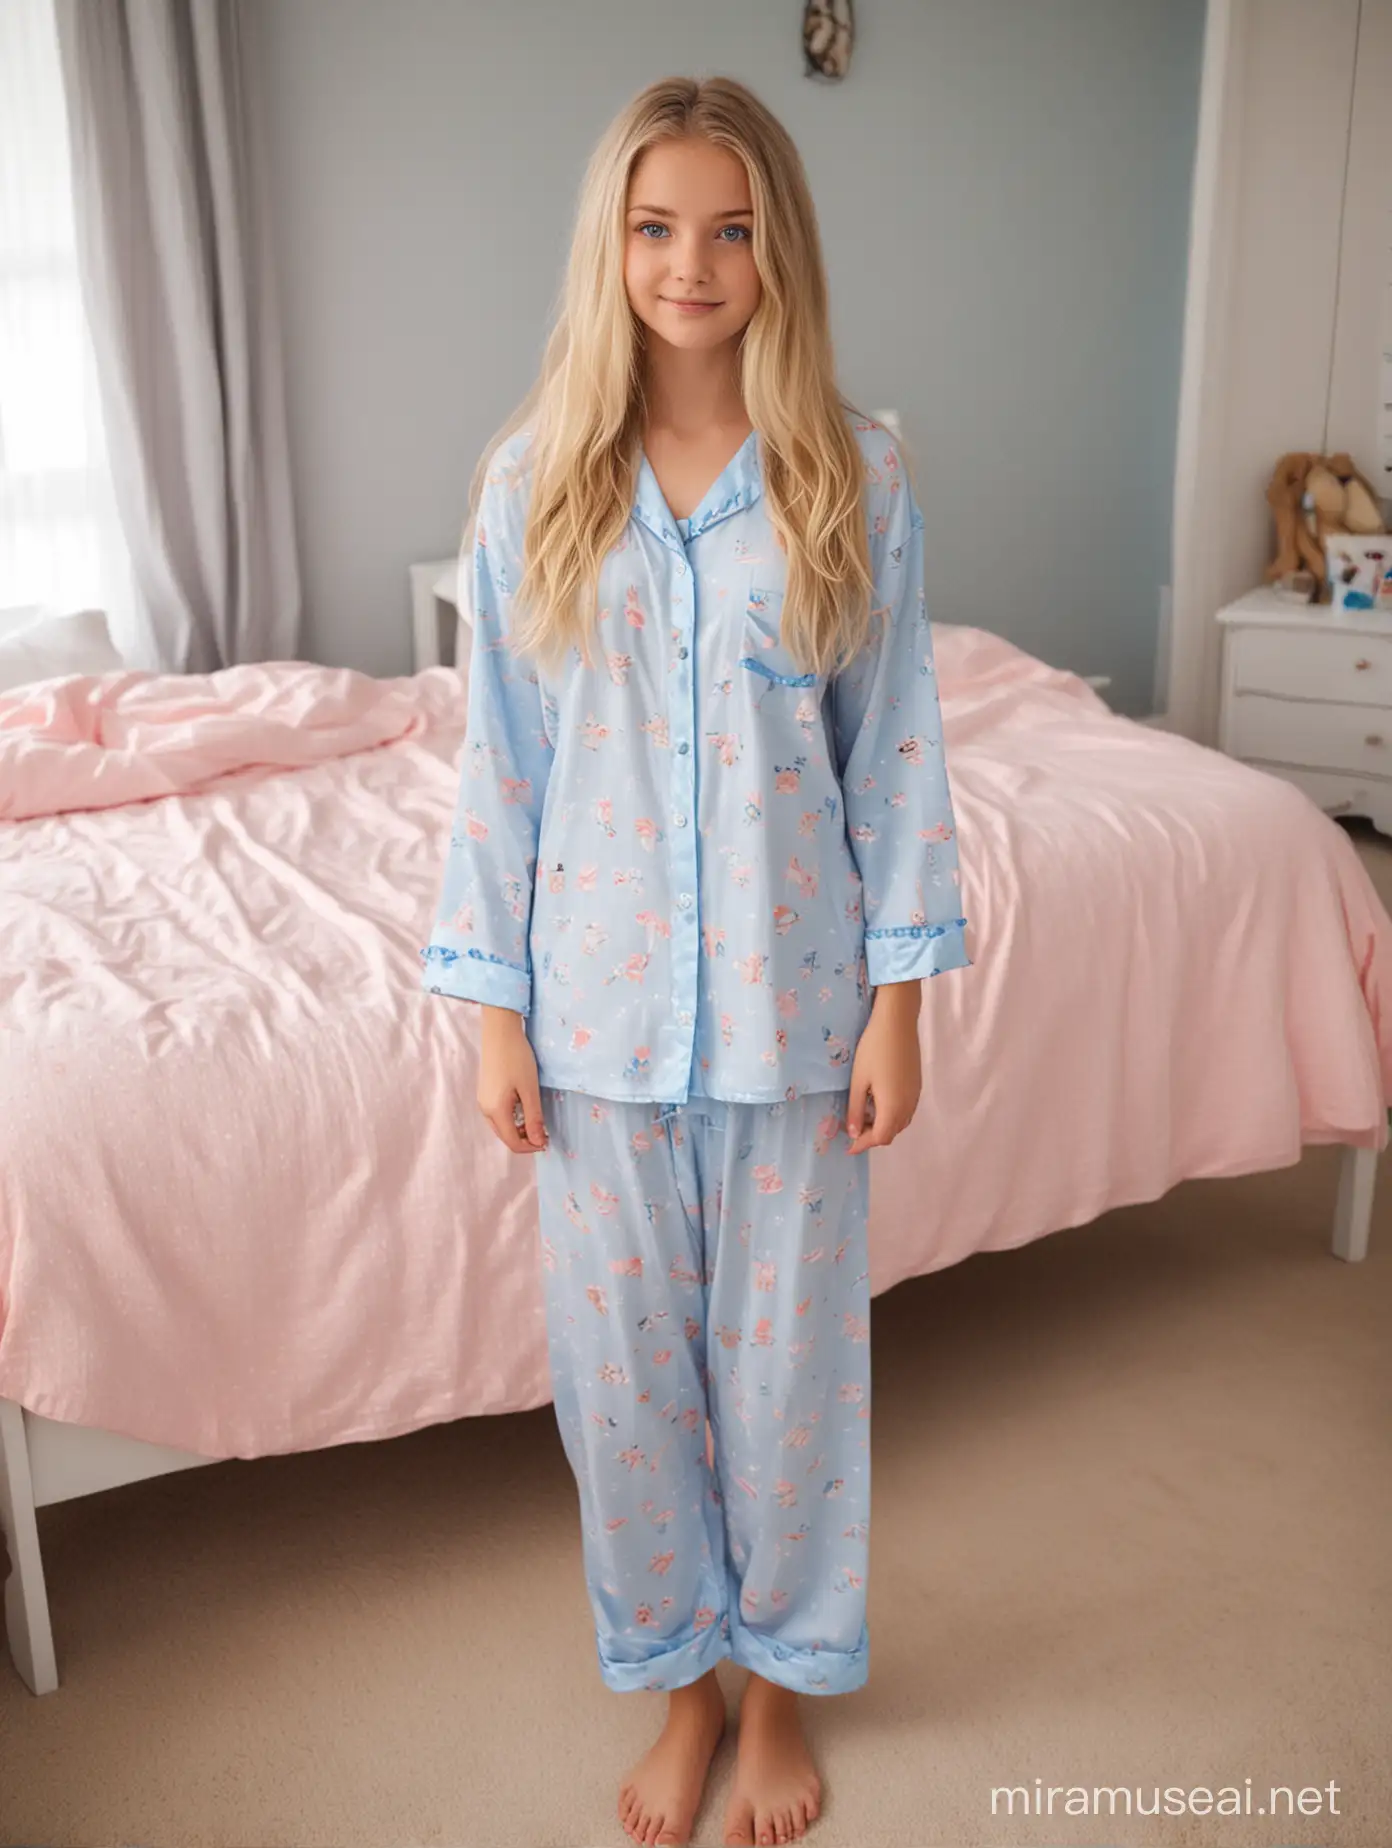 Teenage Girl in Cozy Sleepwear at Sleepover in her Bedroom